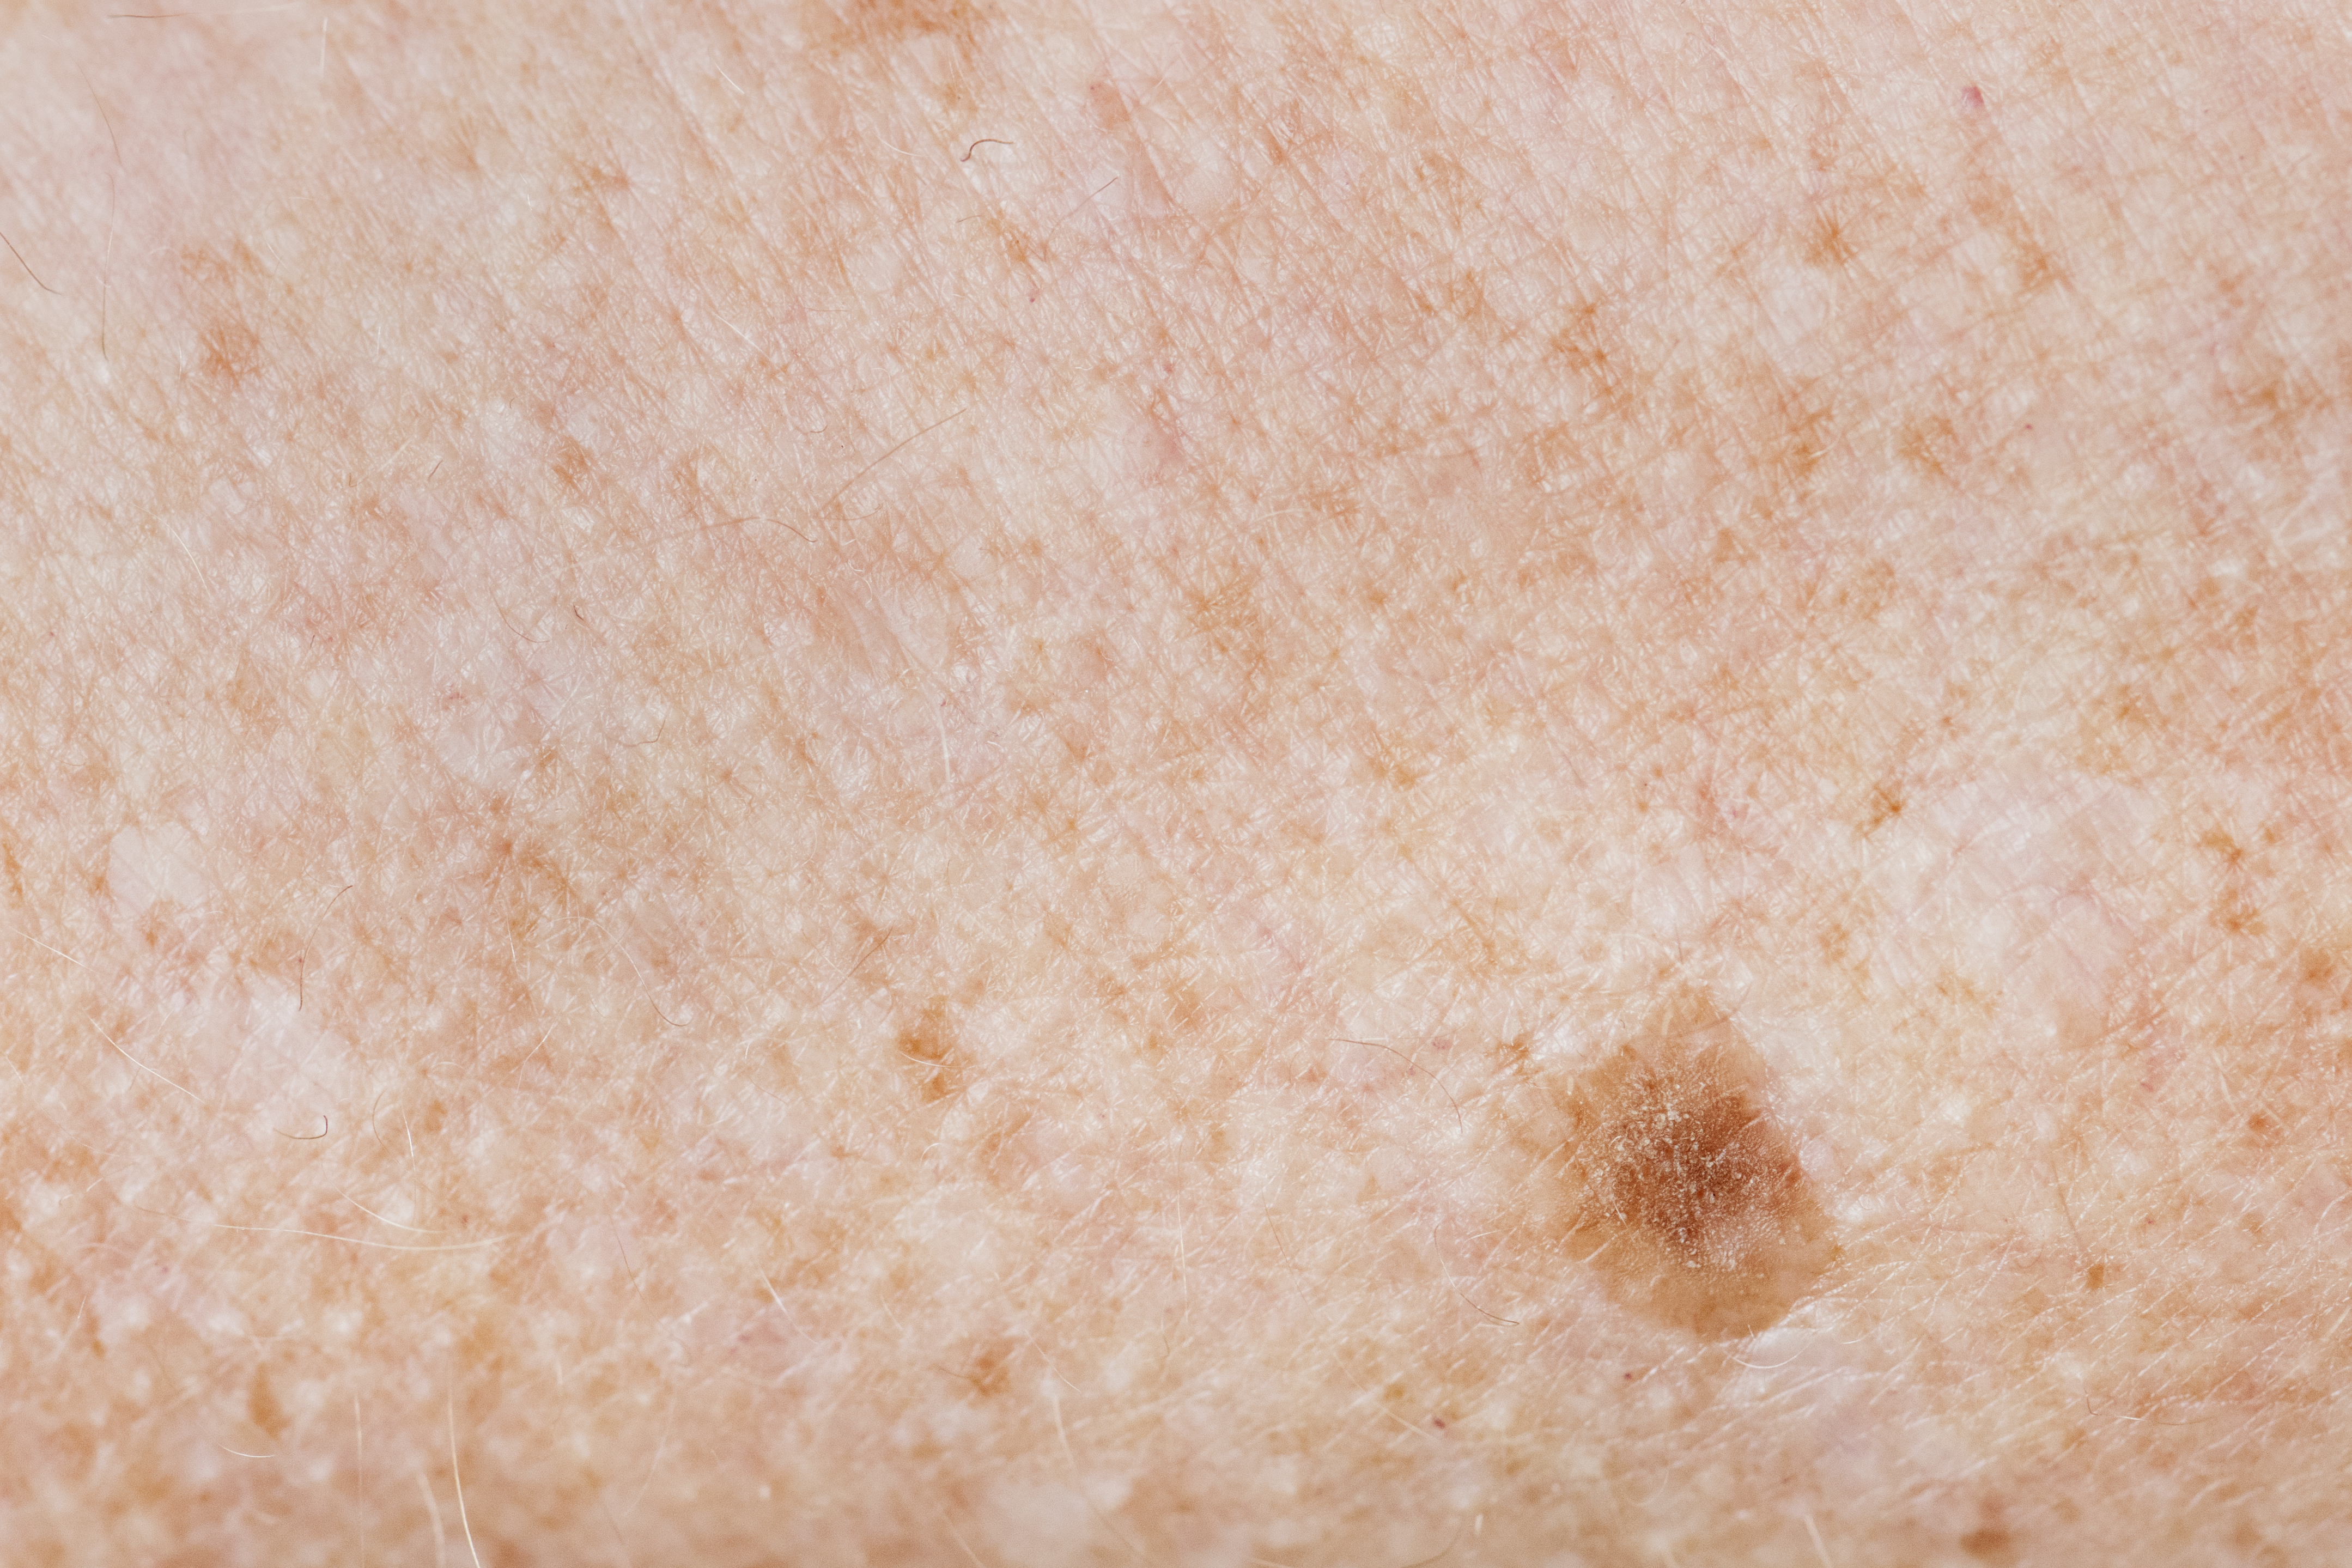 melanoma and age spots maryland